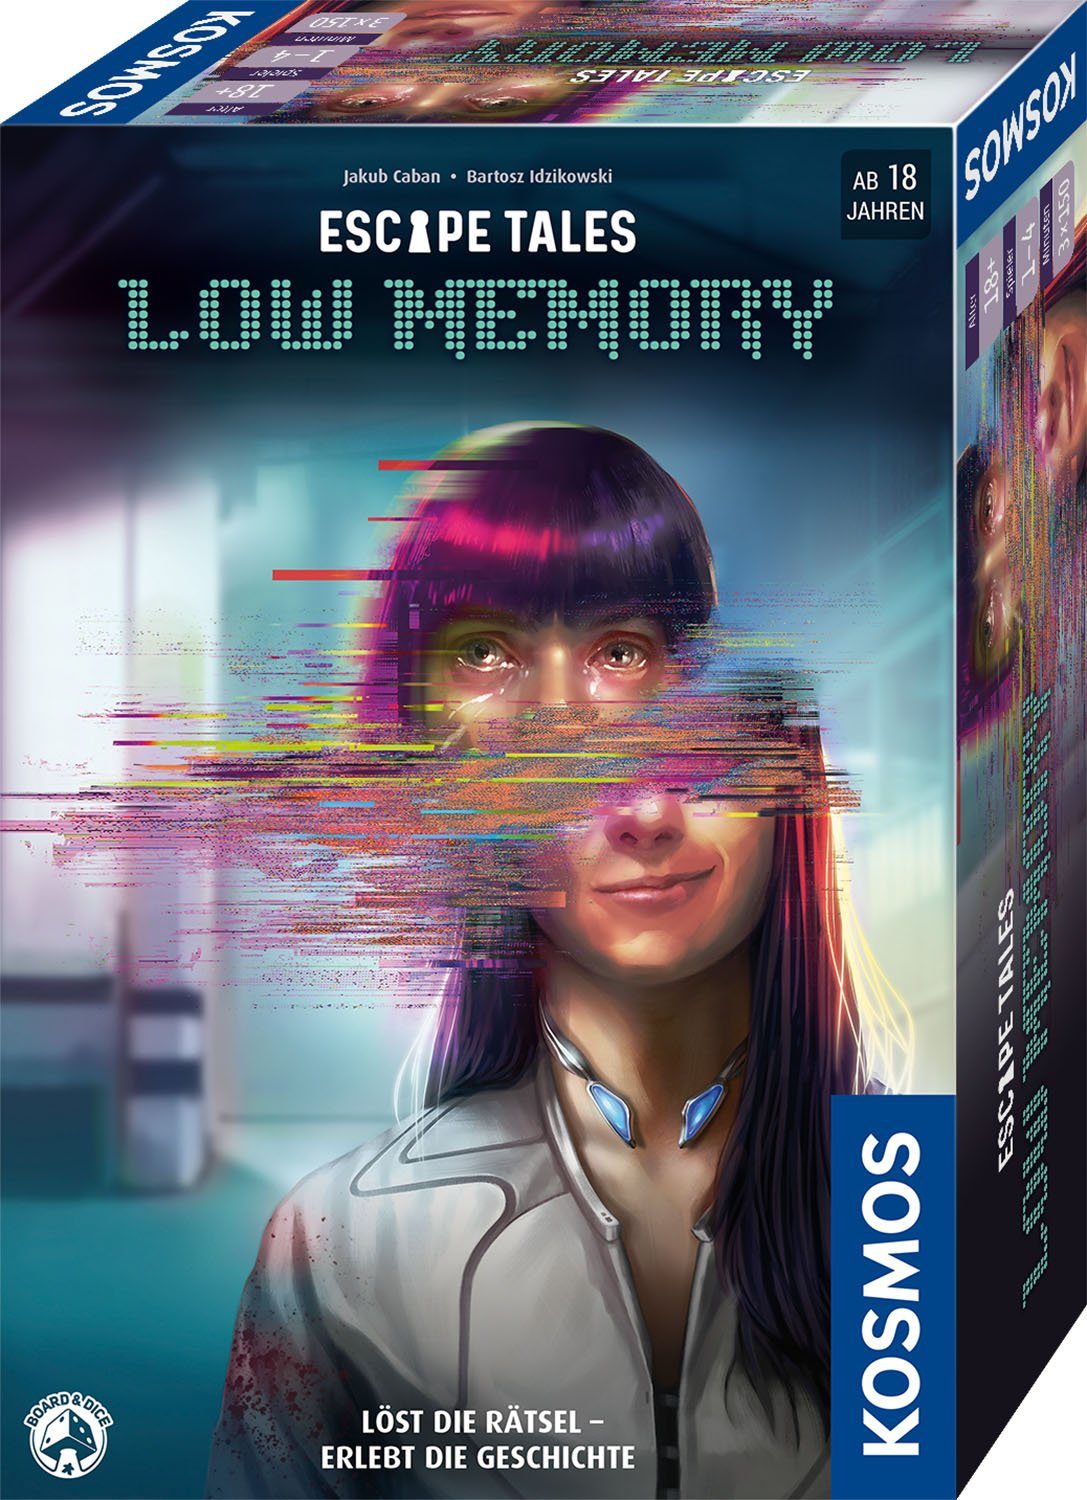 KOSMOS Verlag Spiel, Spiel Escape Tales - Low Memory Der Thriller unter den Escape Games